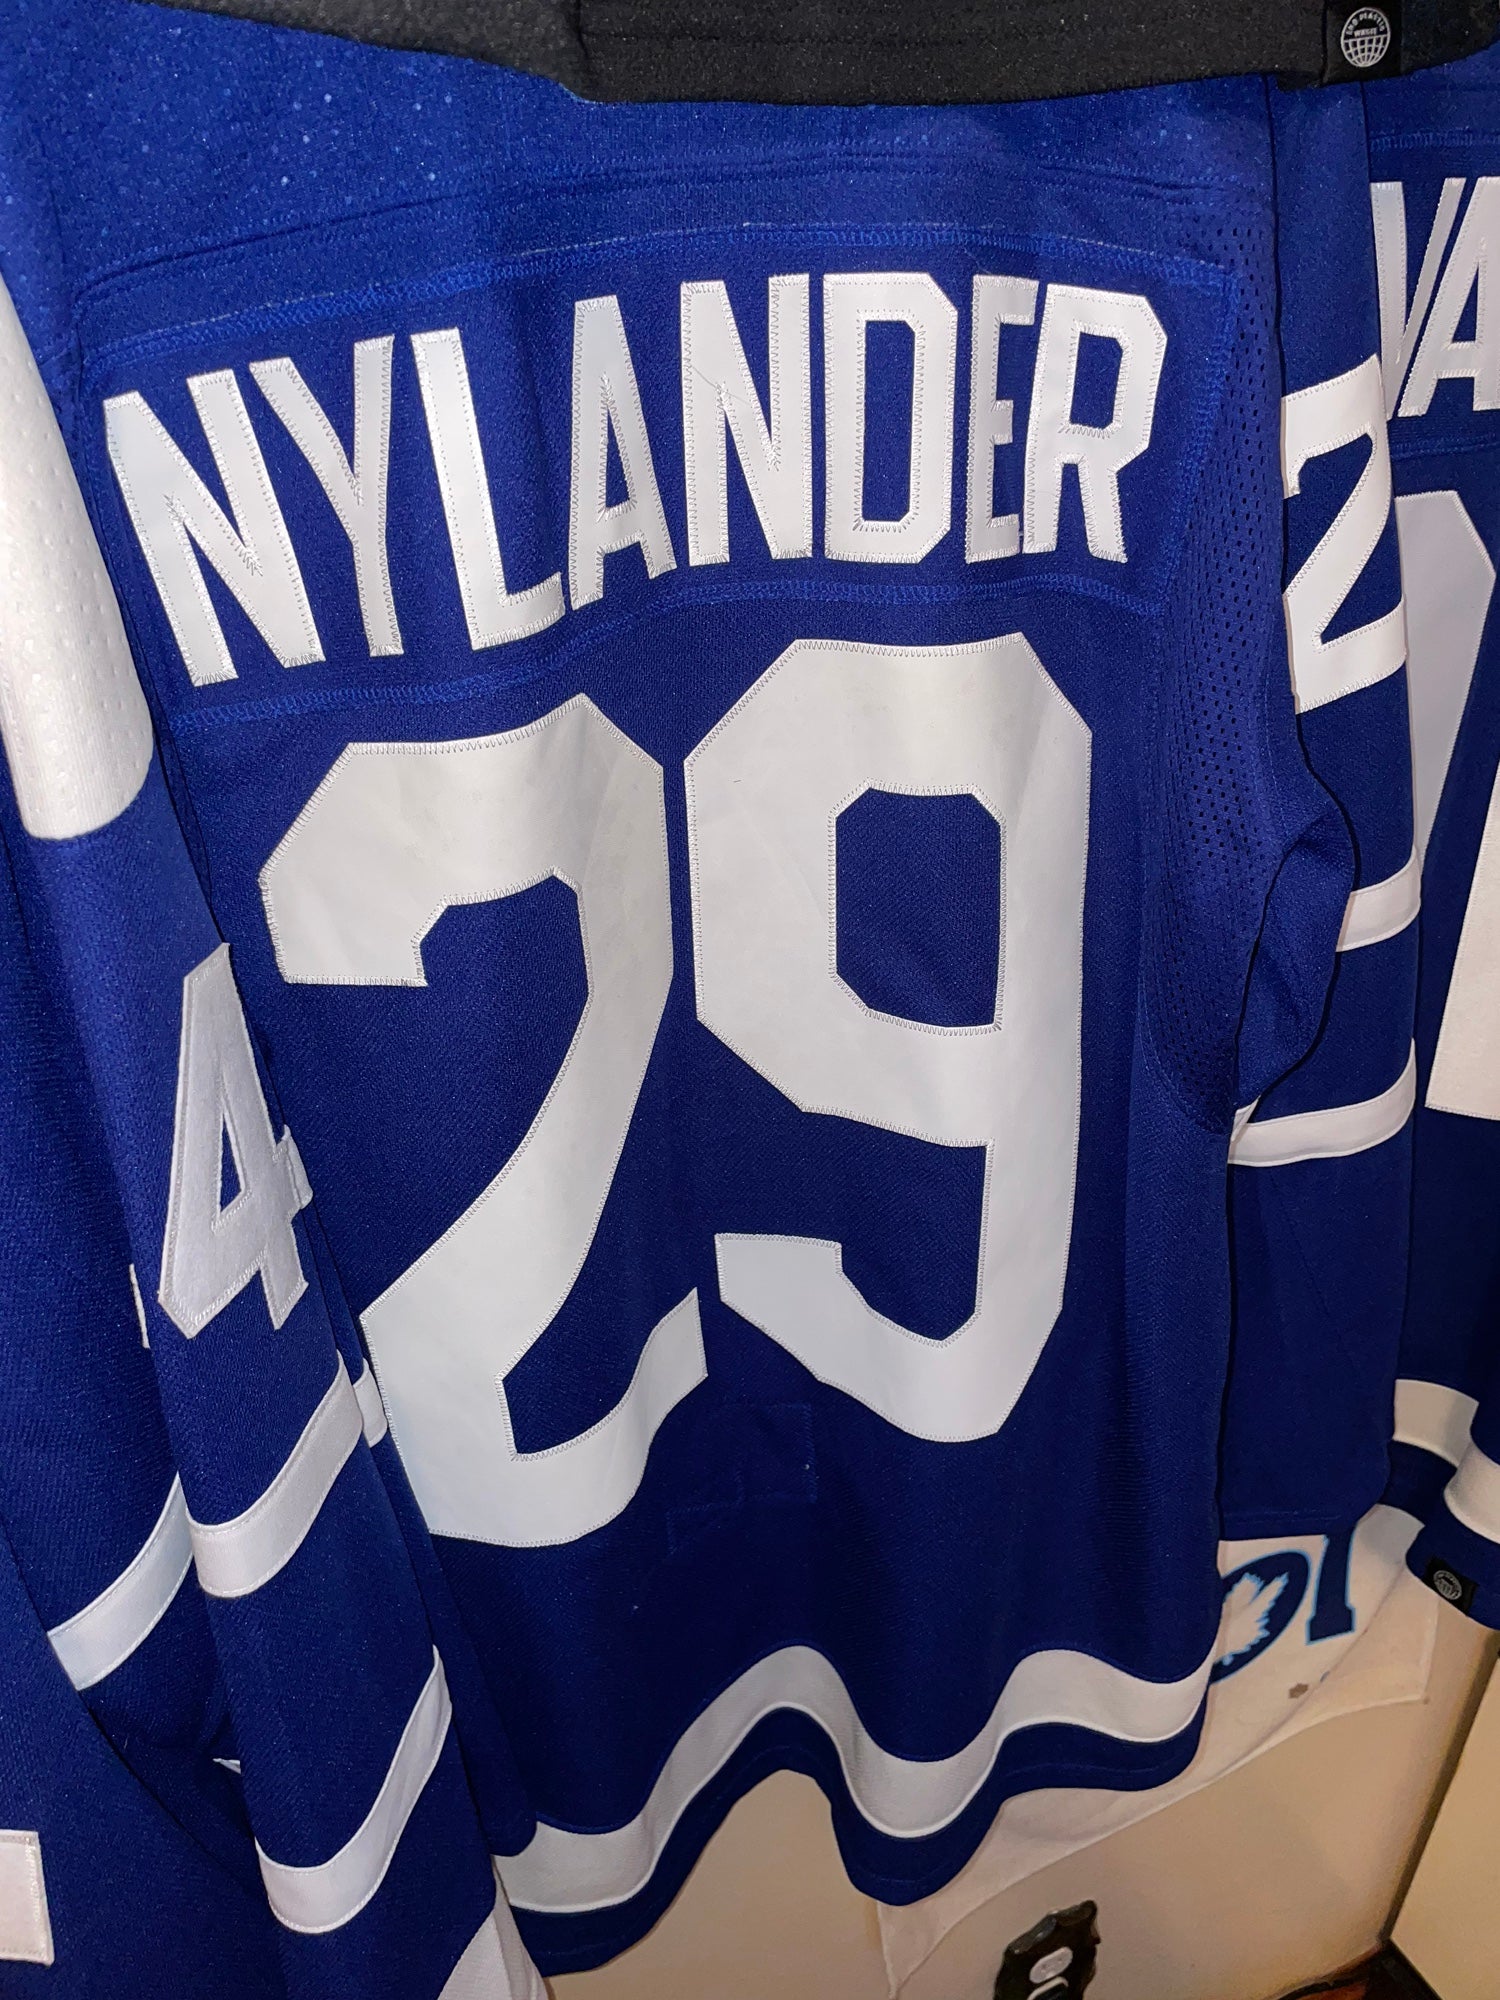 William Nylander Toronto Maple Leafs Jersey